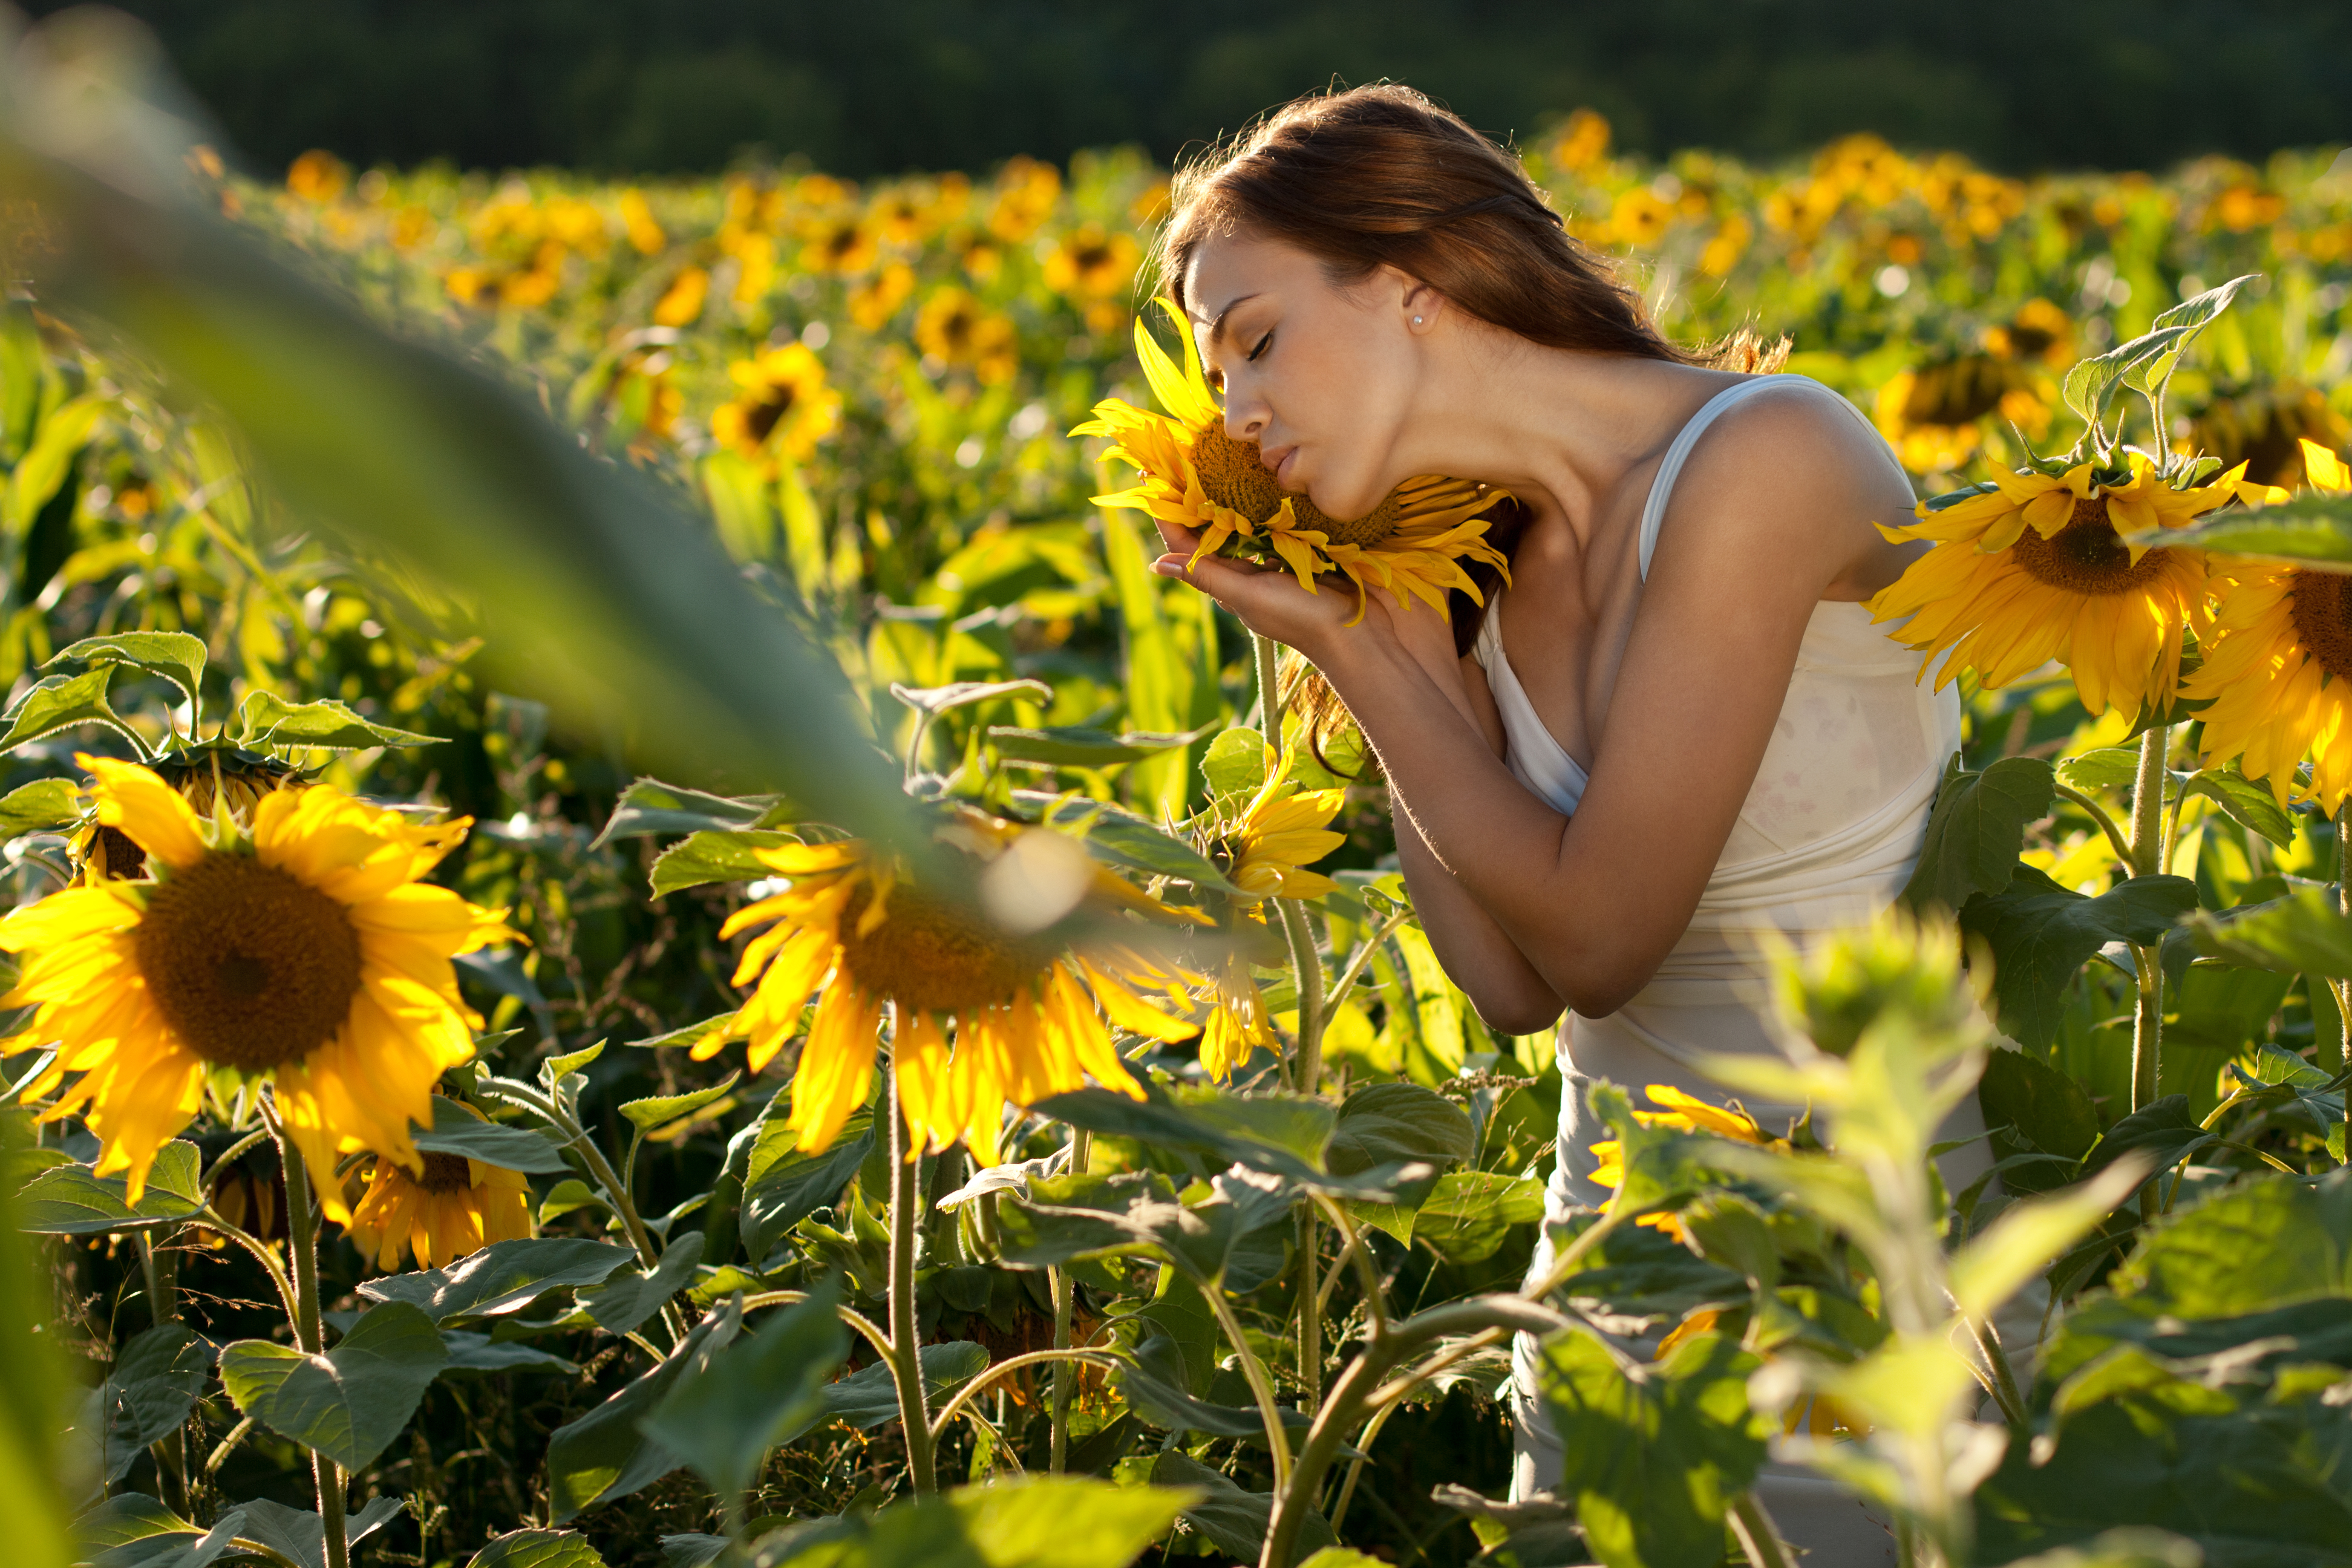 GoodFon.com - Free Wallpapers, download. field, girl, sunflowers. 